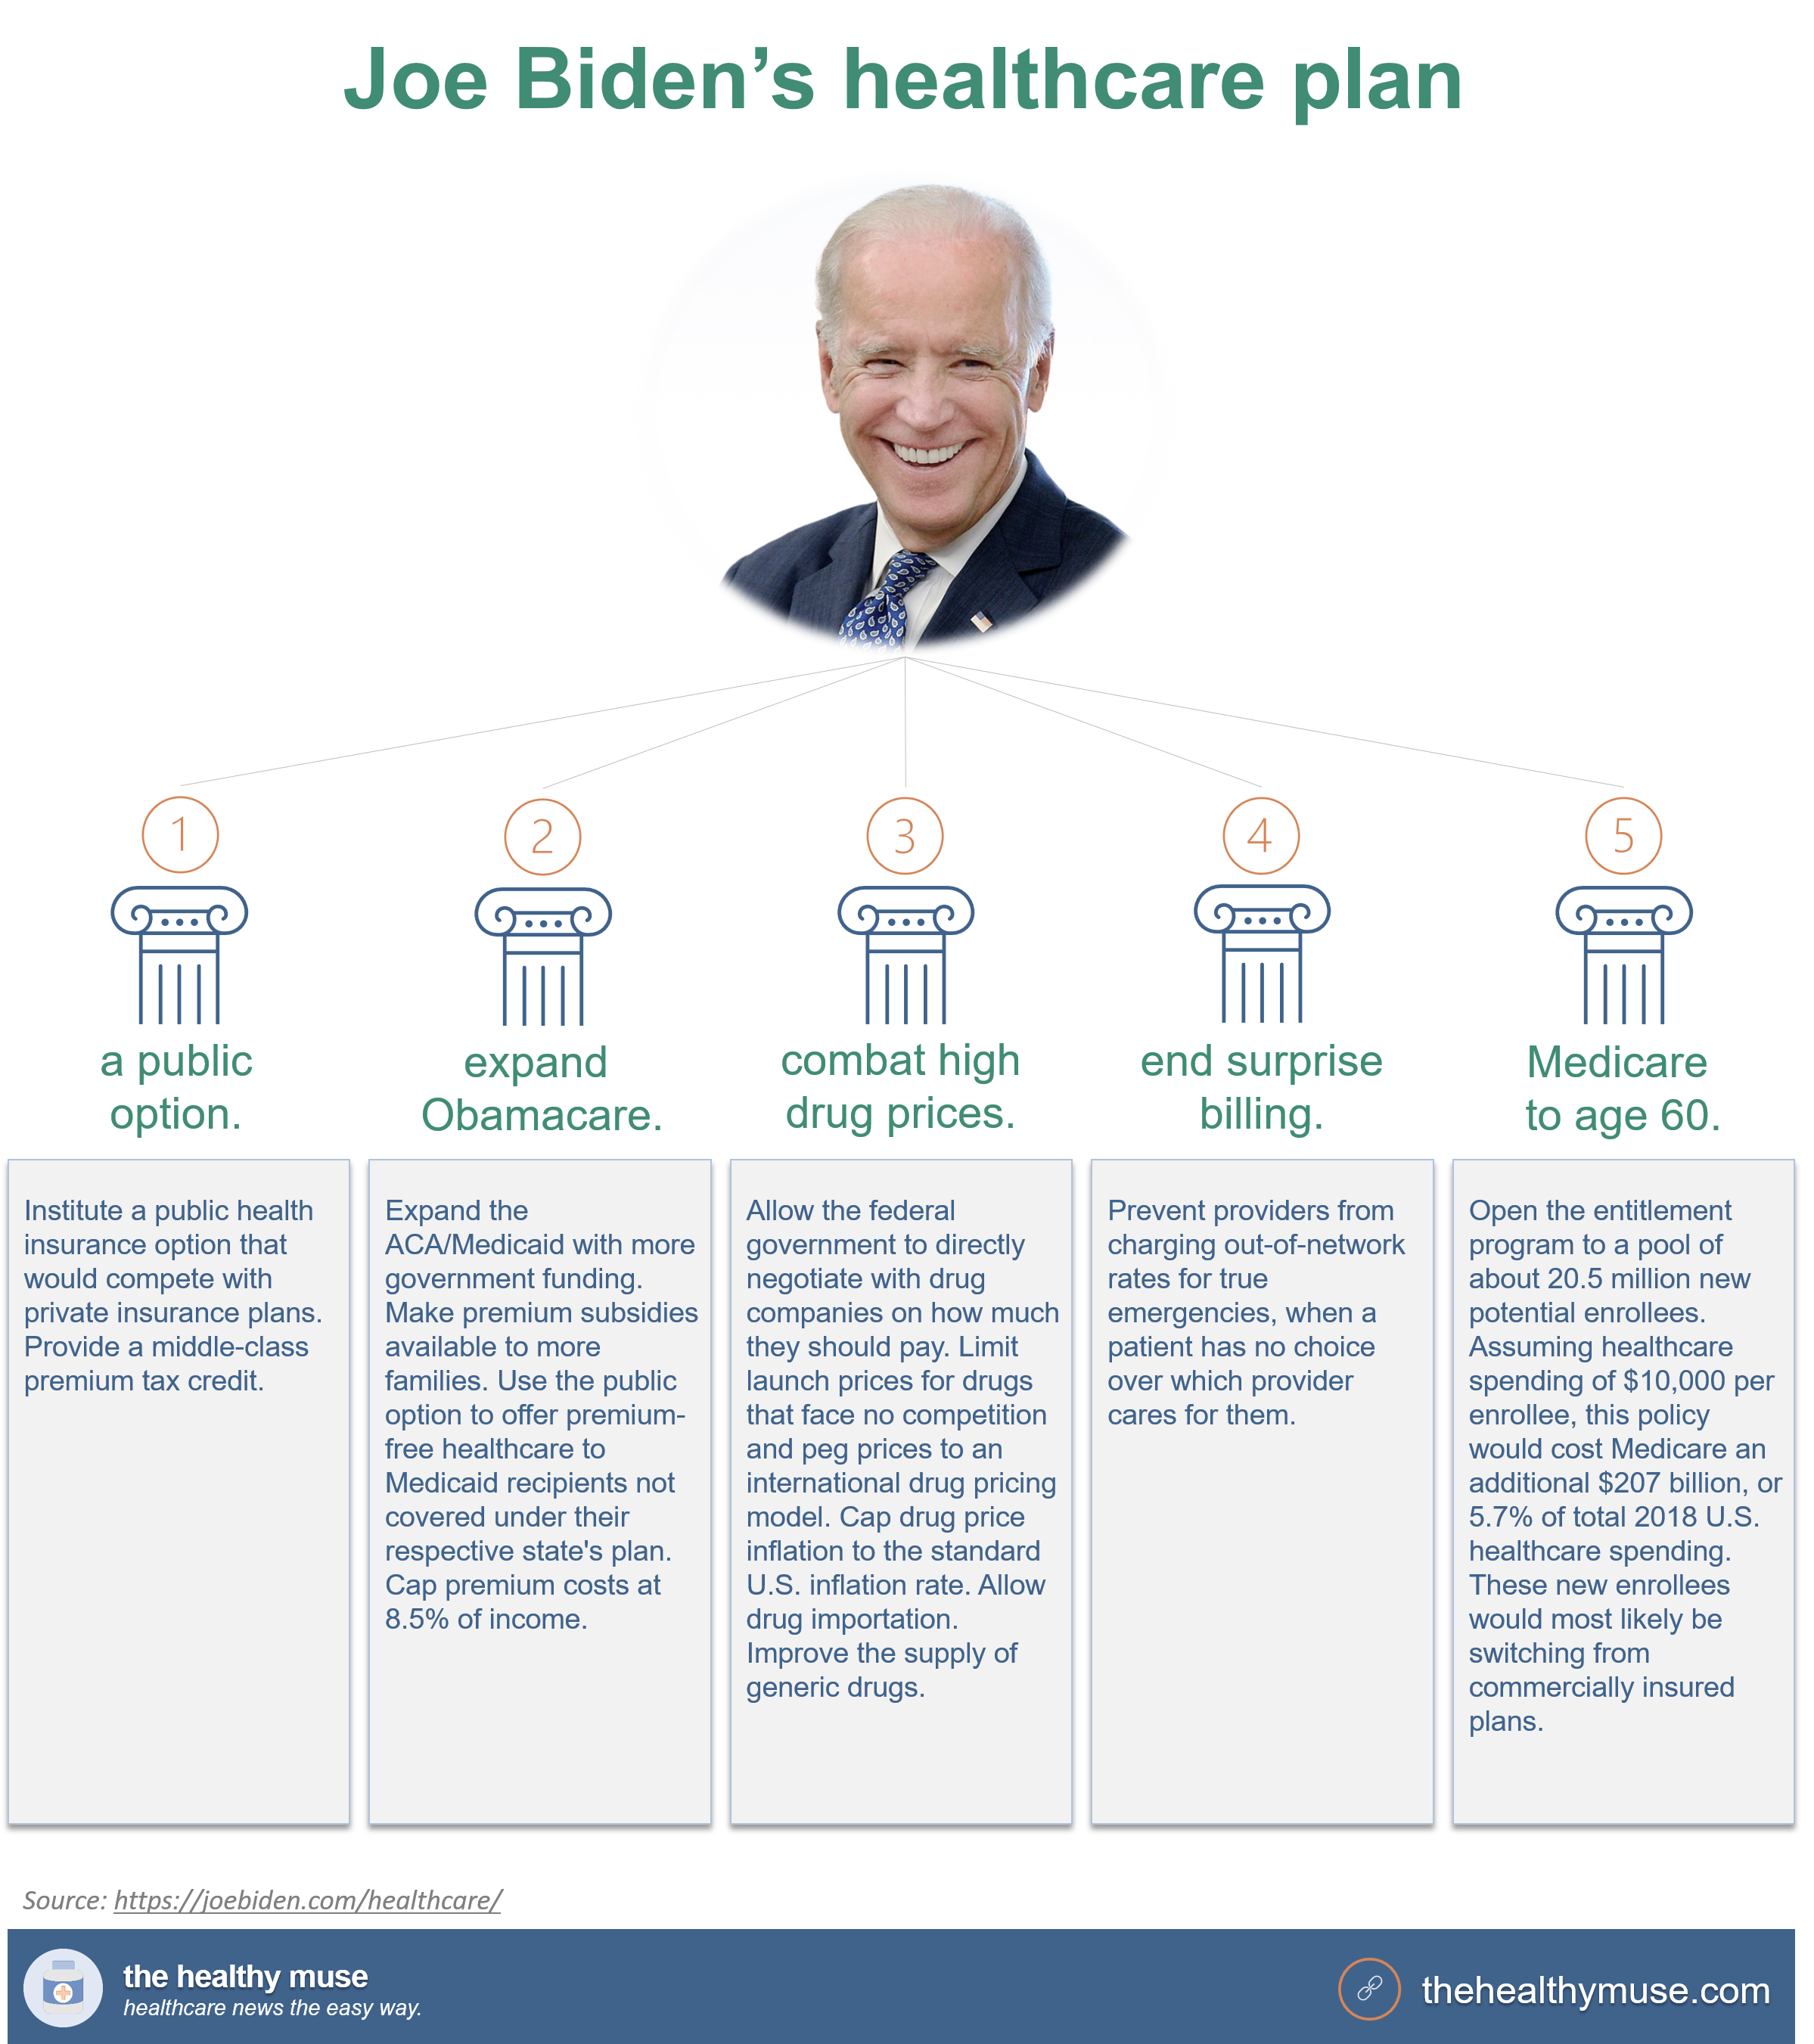 Joe Biden's Healthcare Plan